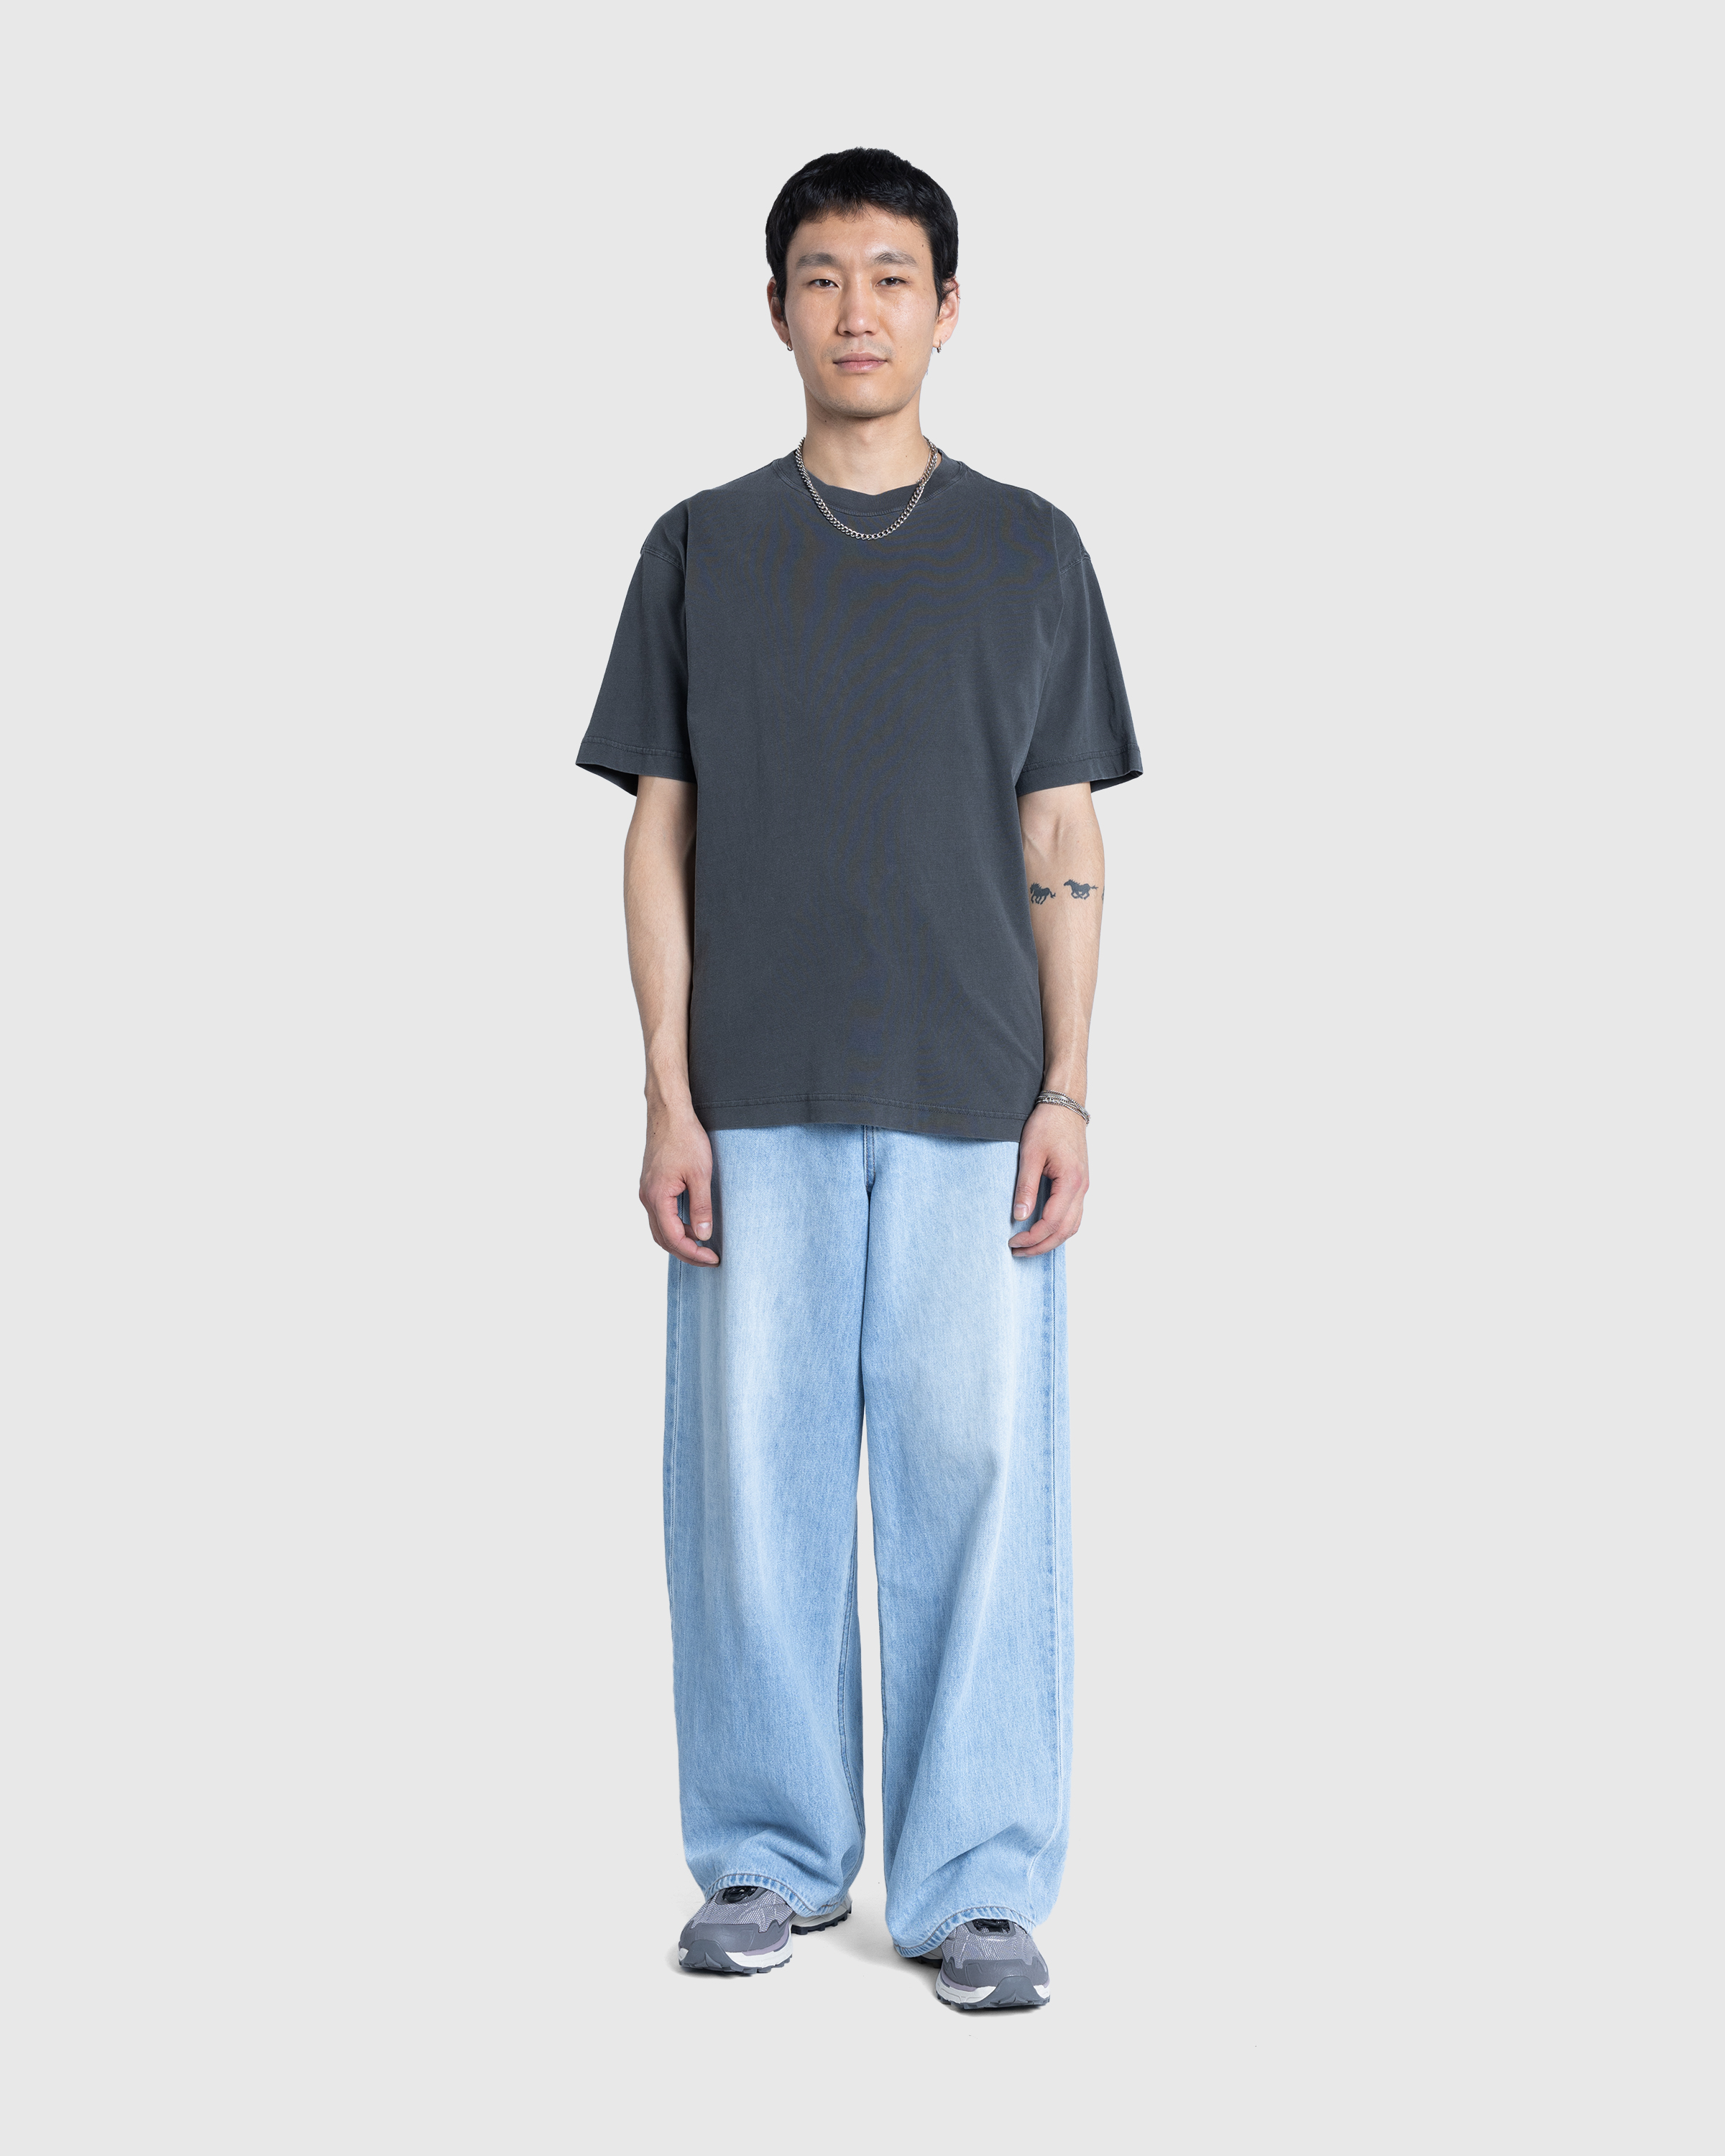 Carhartt WIP – Dune T-Shirt Charcoal/Garment Dyed - Tops - Grey - Image 3